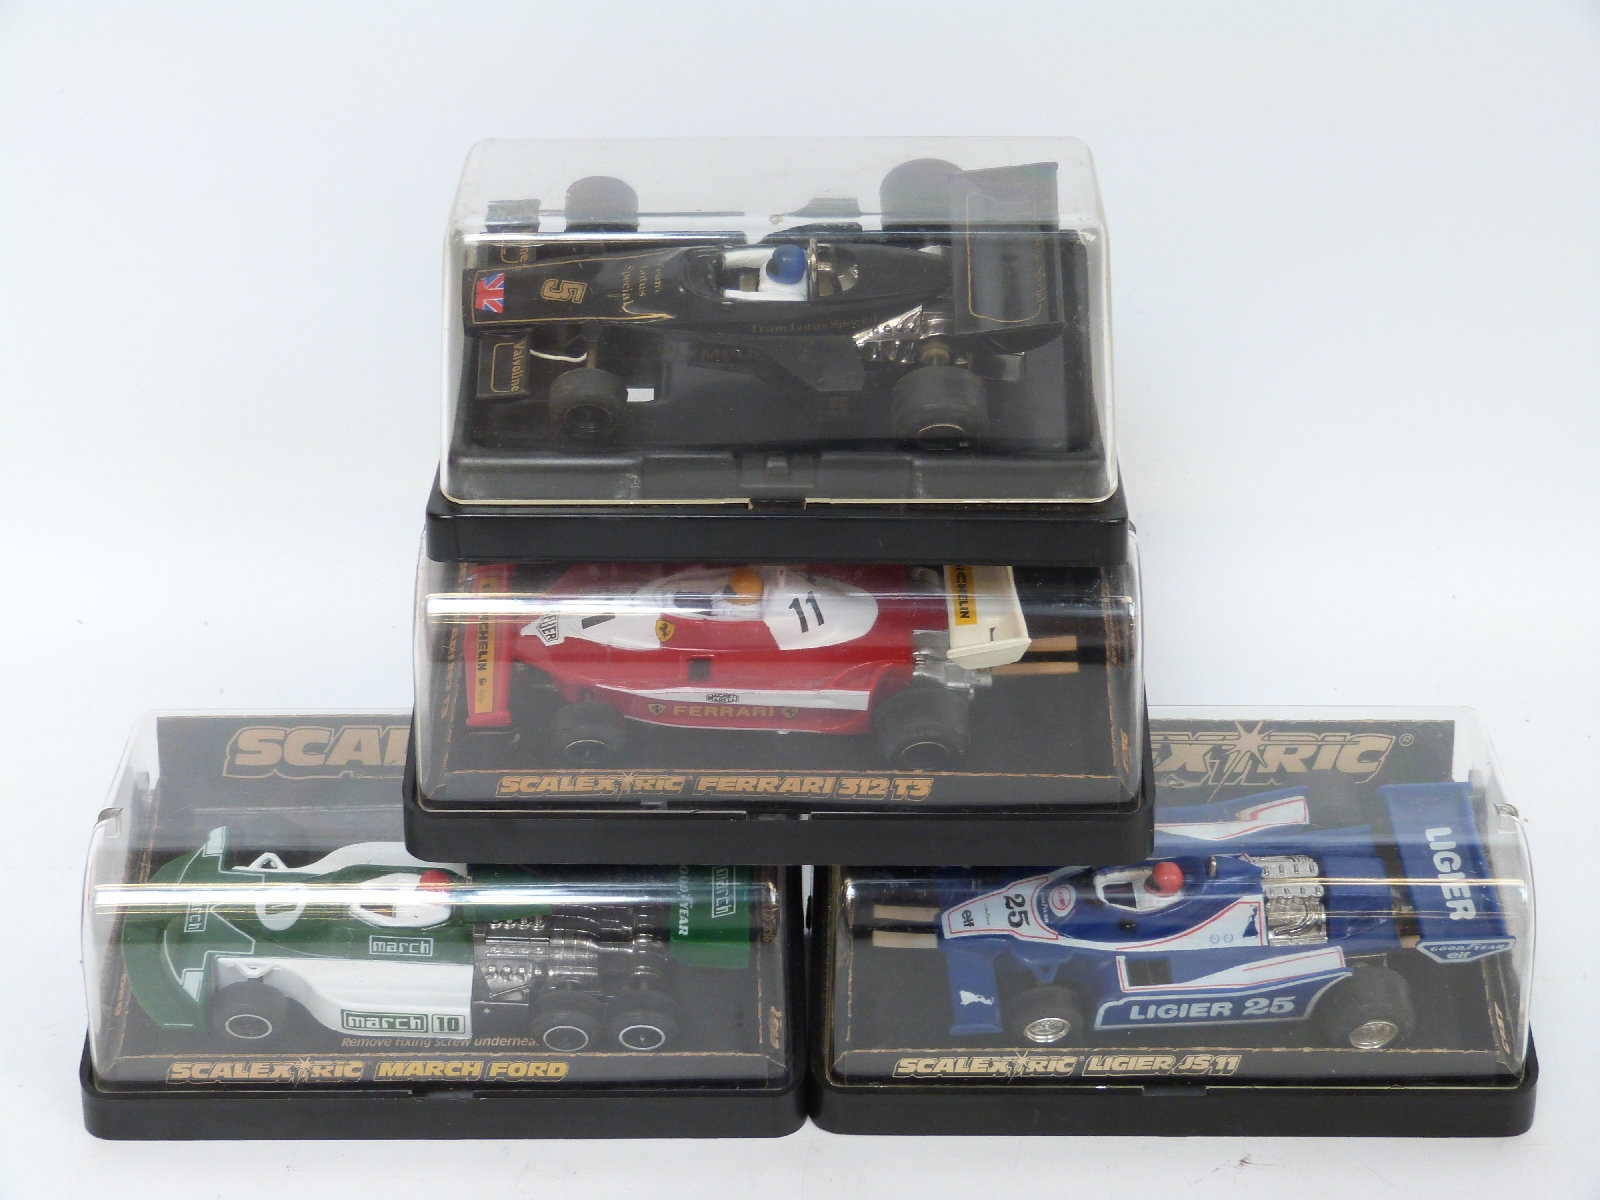 Four Scalextric model Formula 1 cars March Ford C131, Ferrari 312T3 C136,